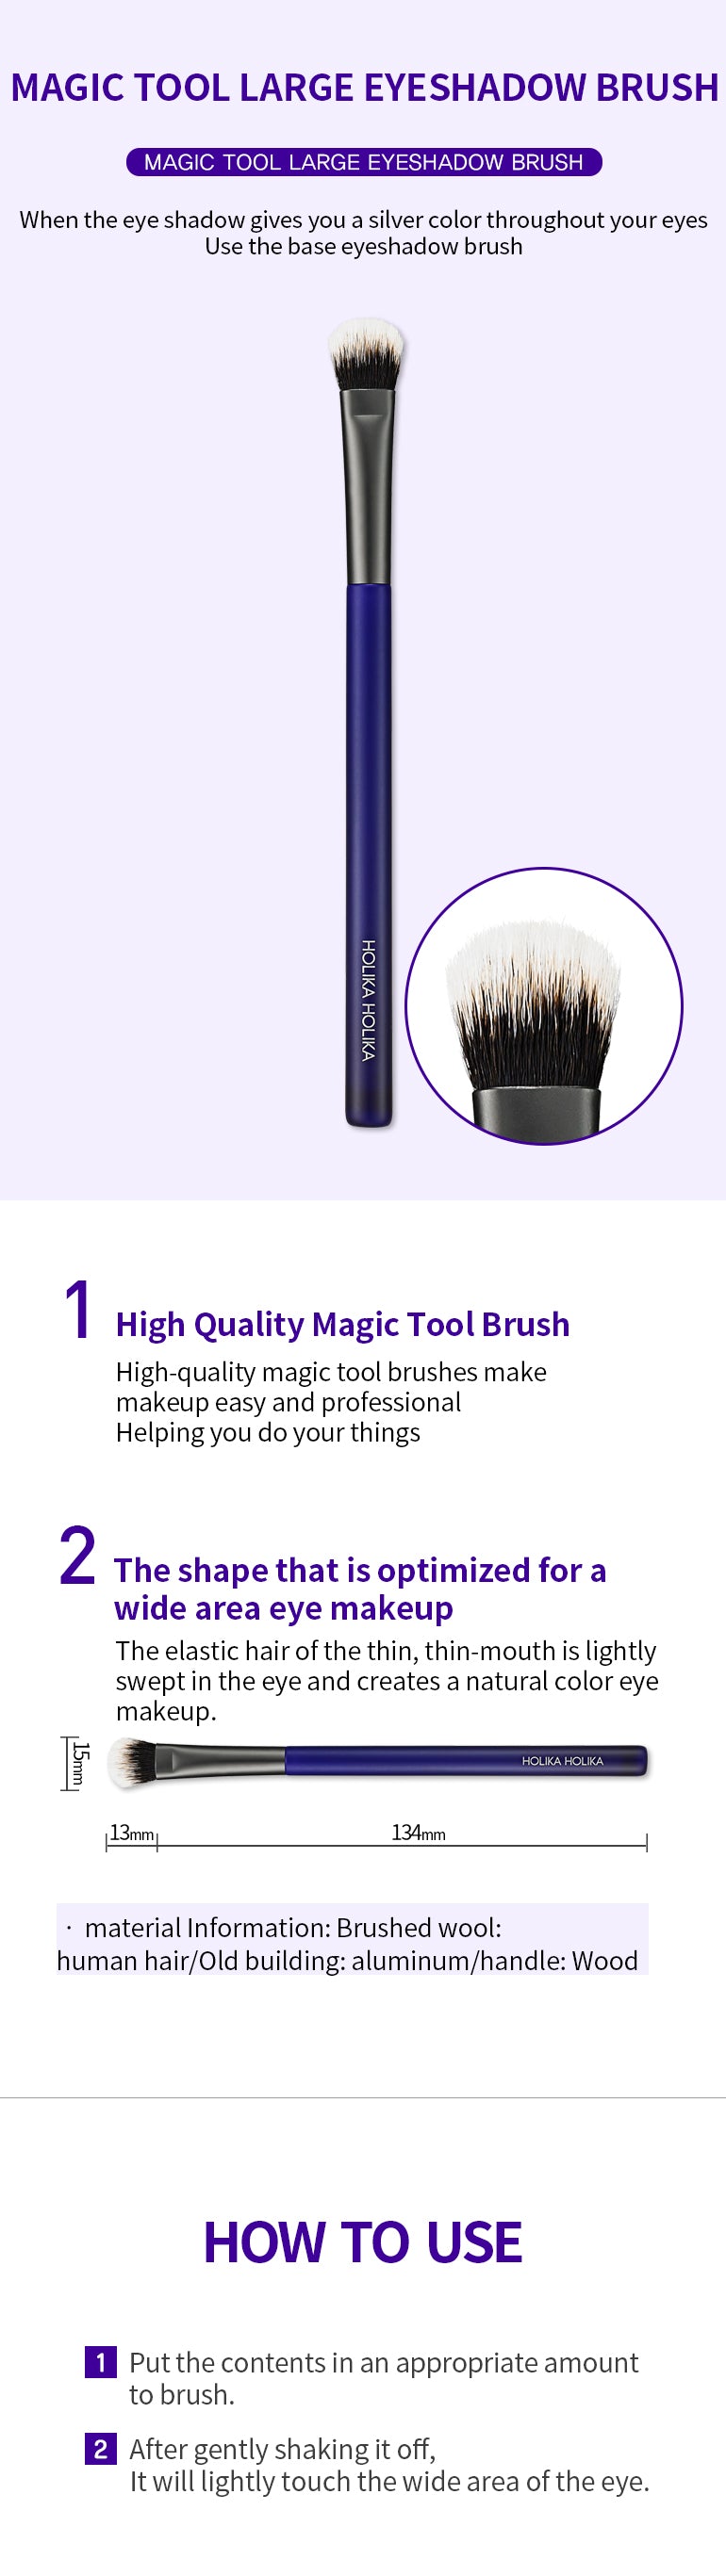 Kuas Eyeshadow | Magic Tool Large Eyeshadow Brush